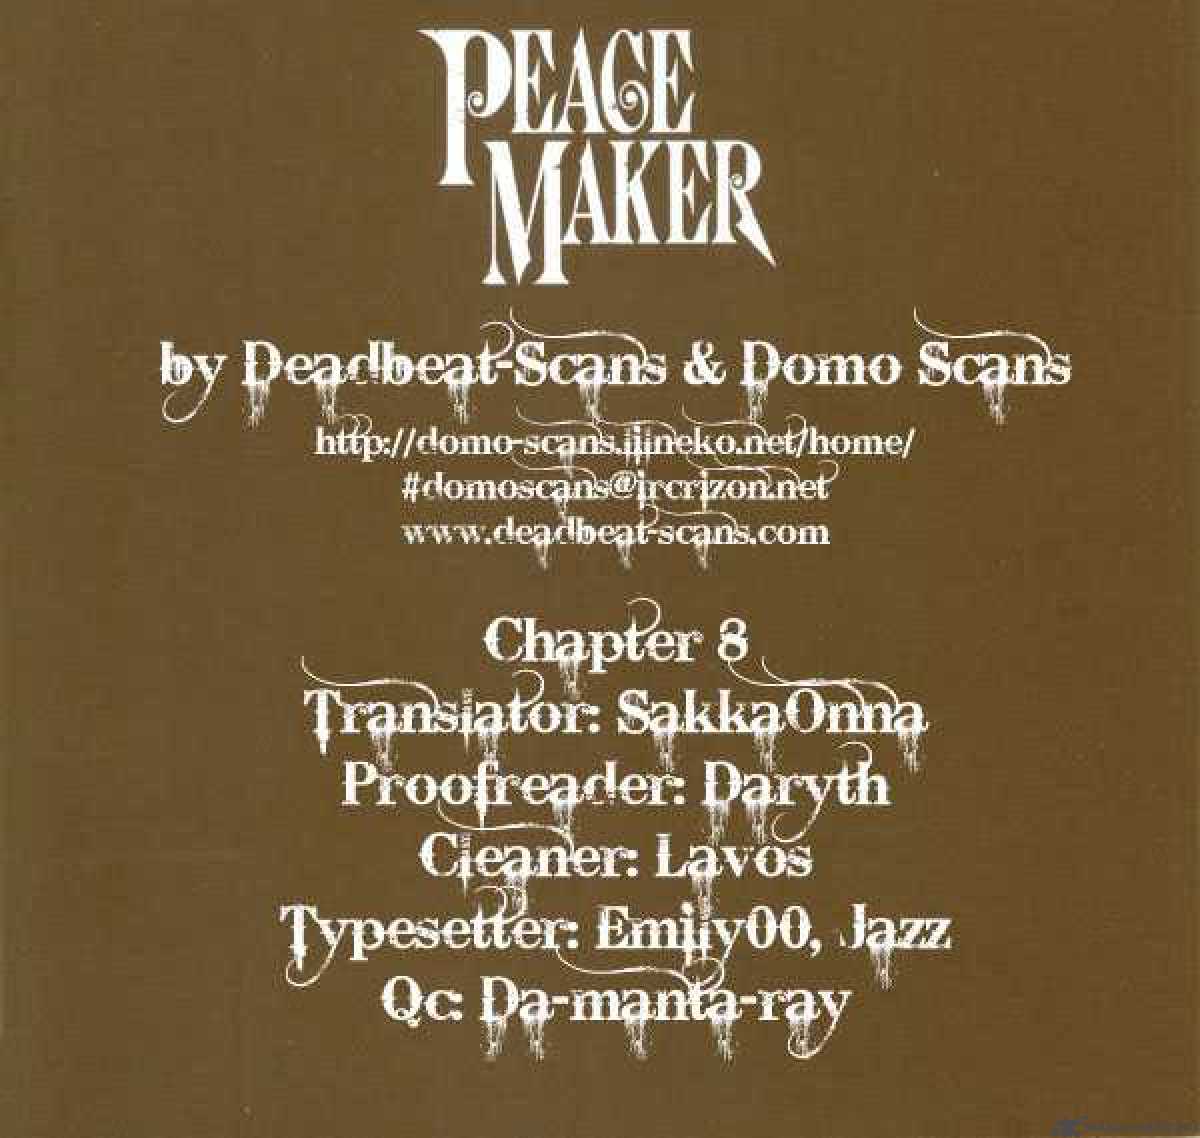 peace_maker_8_33